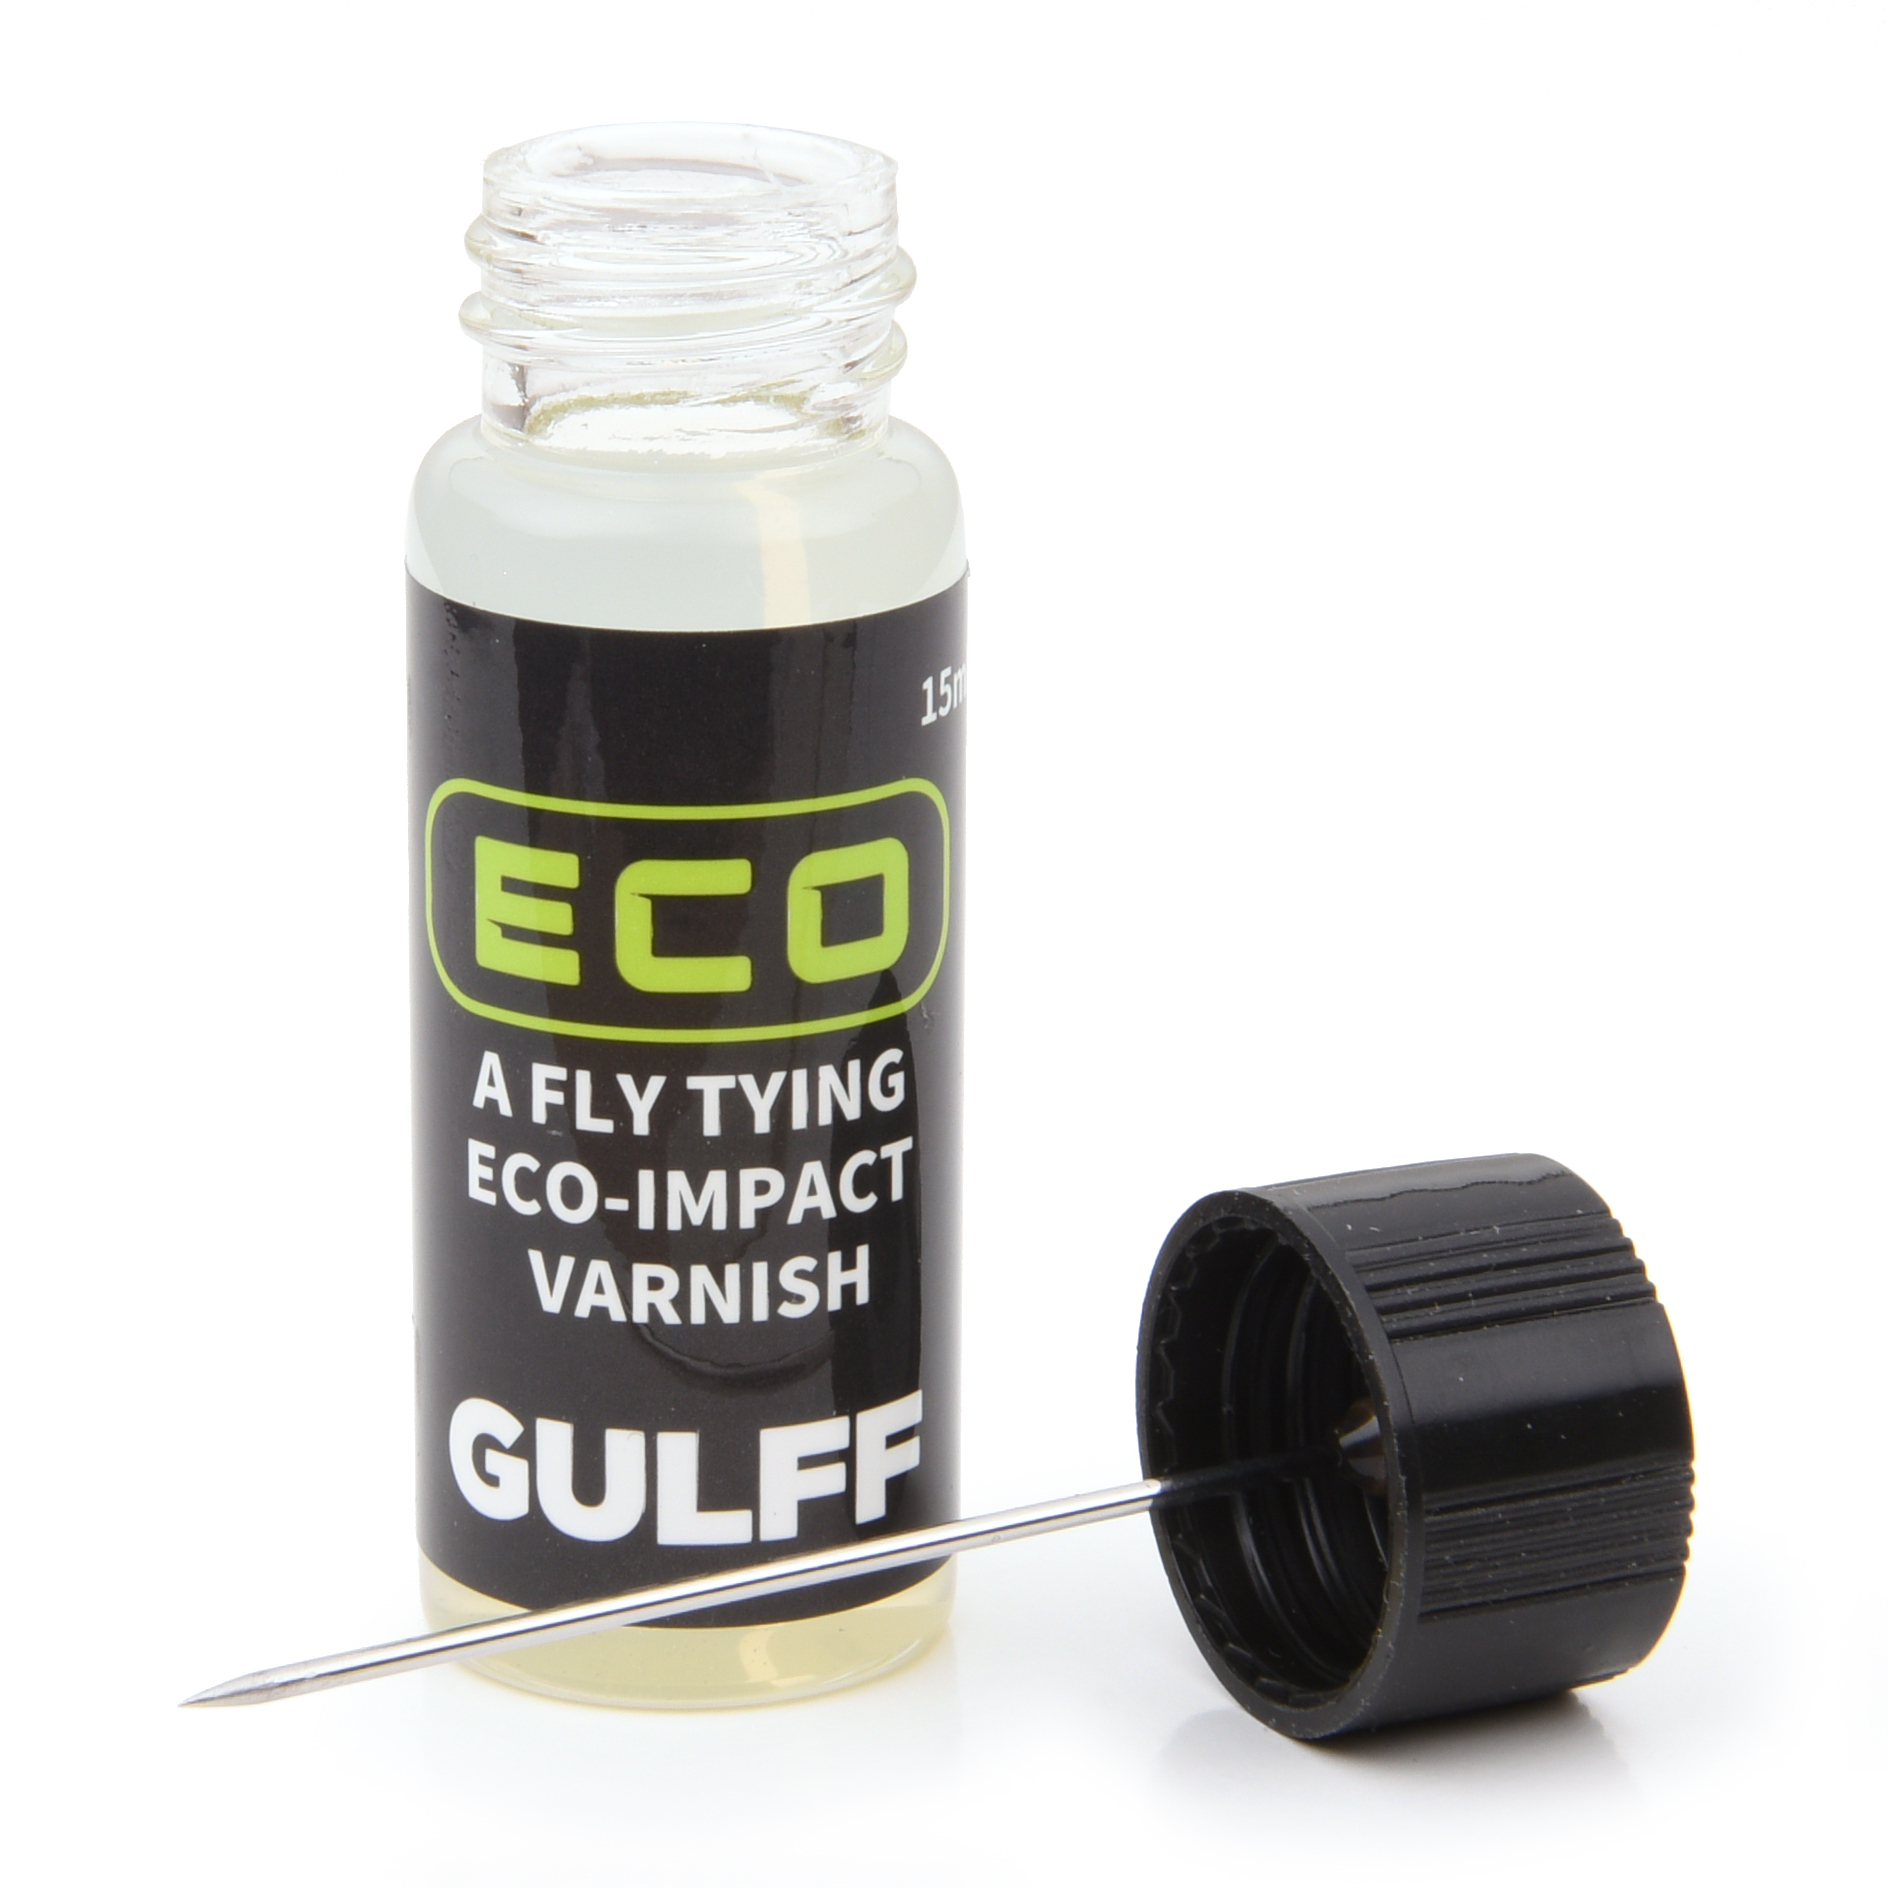 GULFF Eco varnish